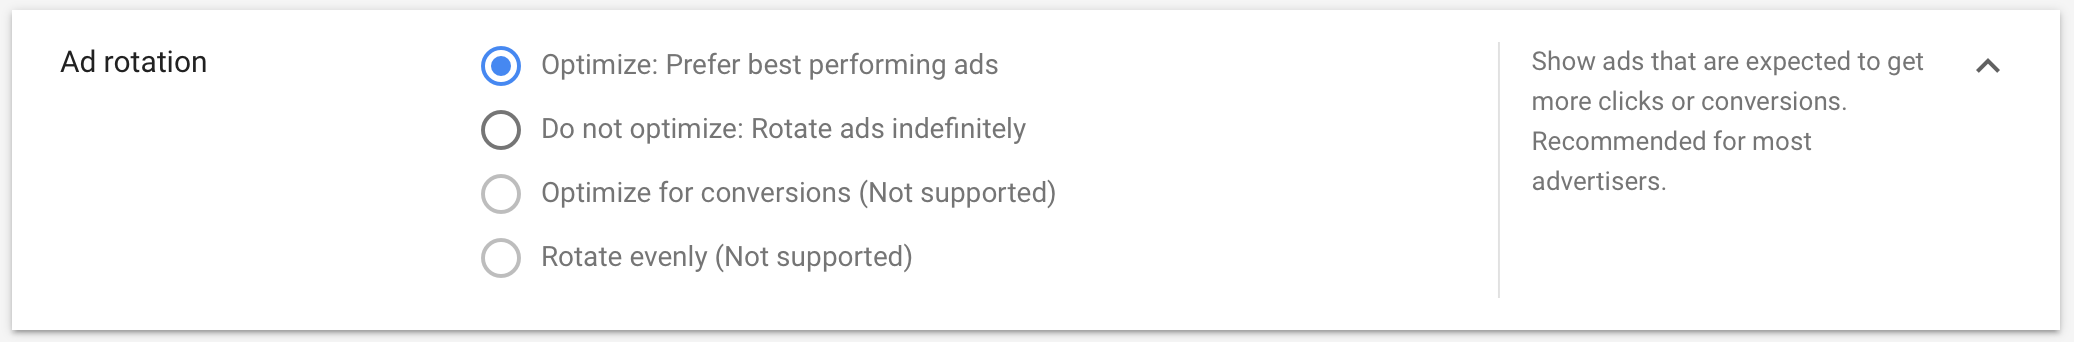 Google Ads Ad Rotation 